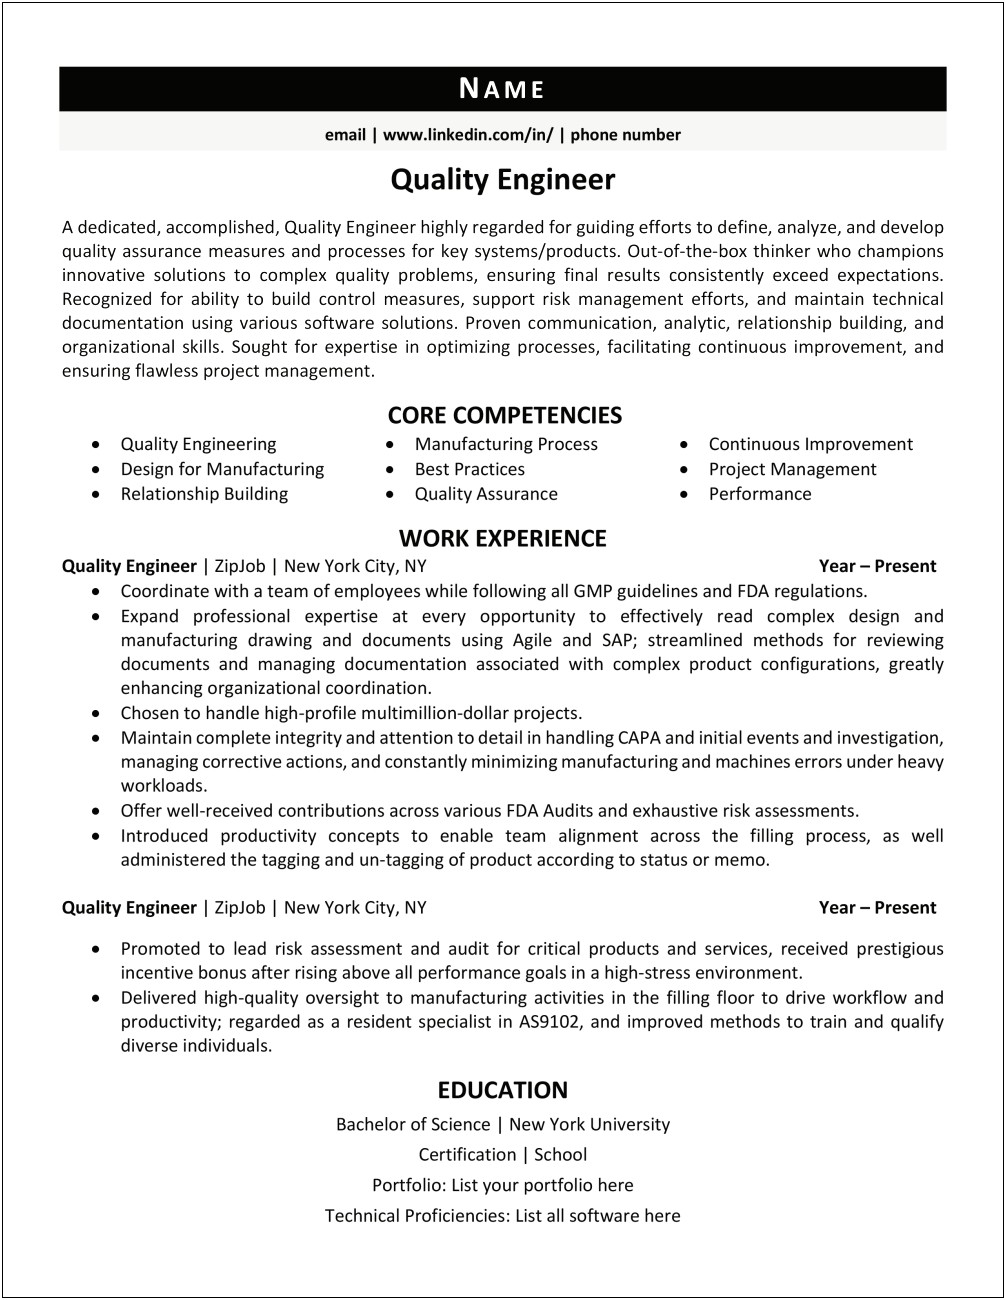 Quality Engineer Summary Statement Resume Examples